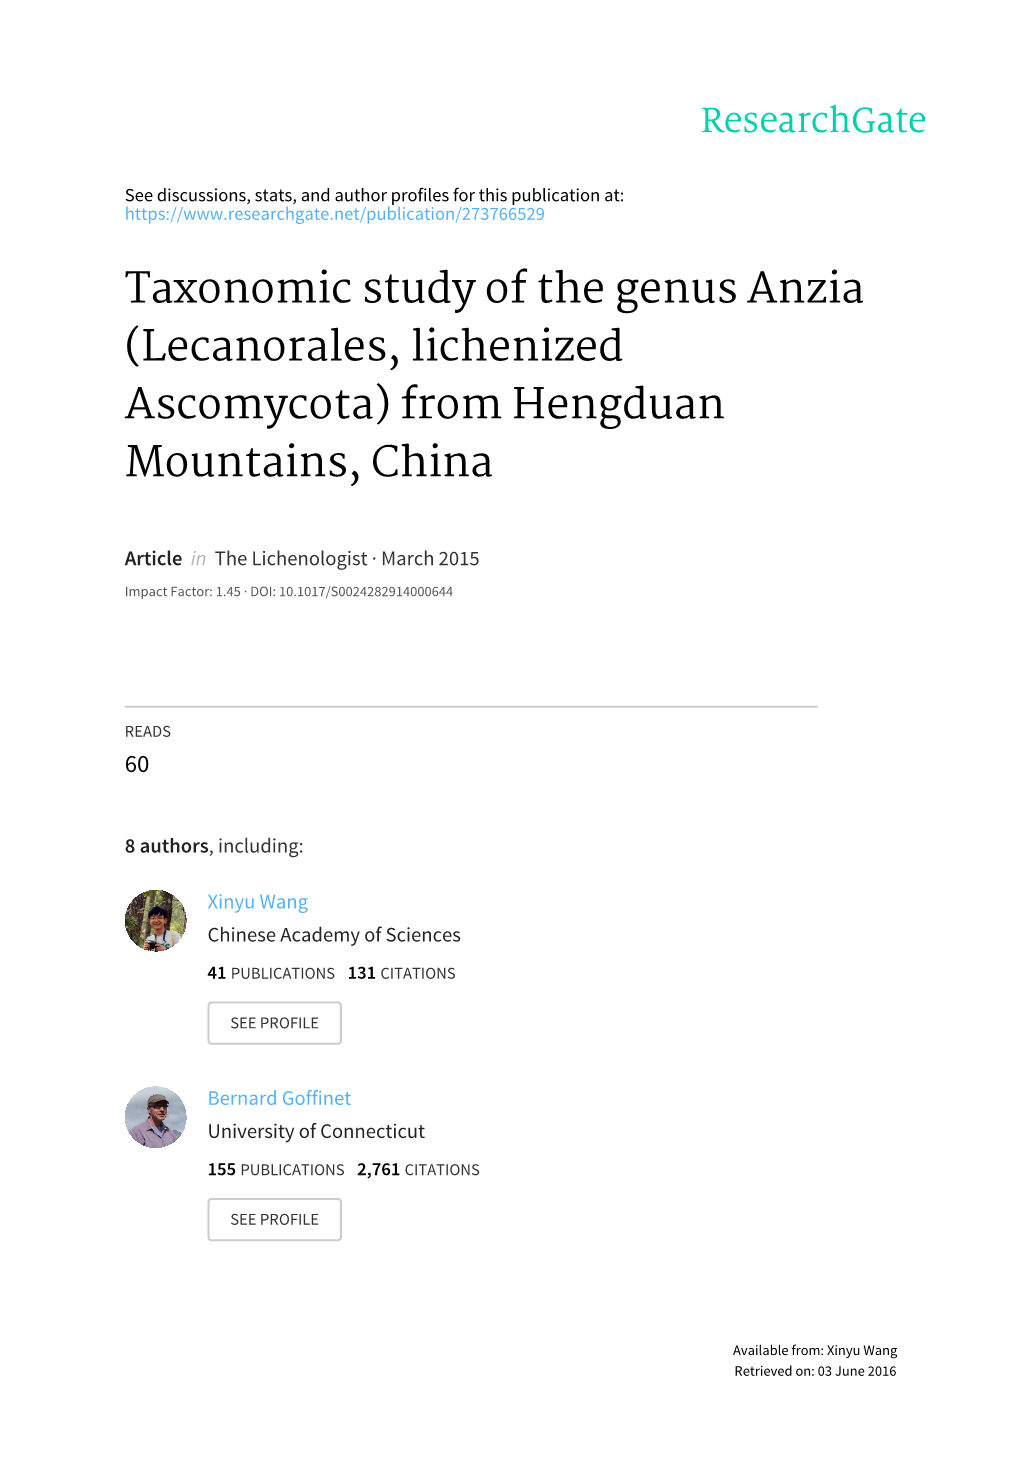 Taxonomic Study of the Genus Anzia (Lecanorales, Lichenized Ascomycota) from Hengduan Mountains, China